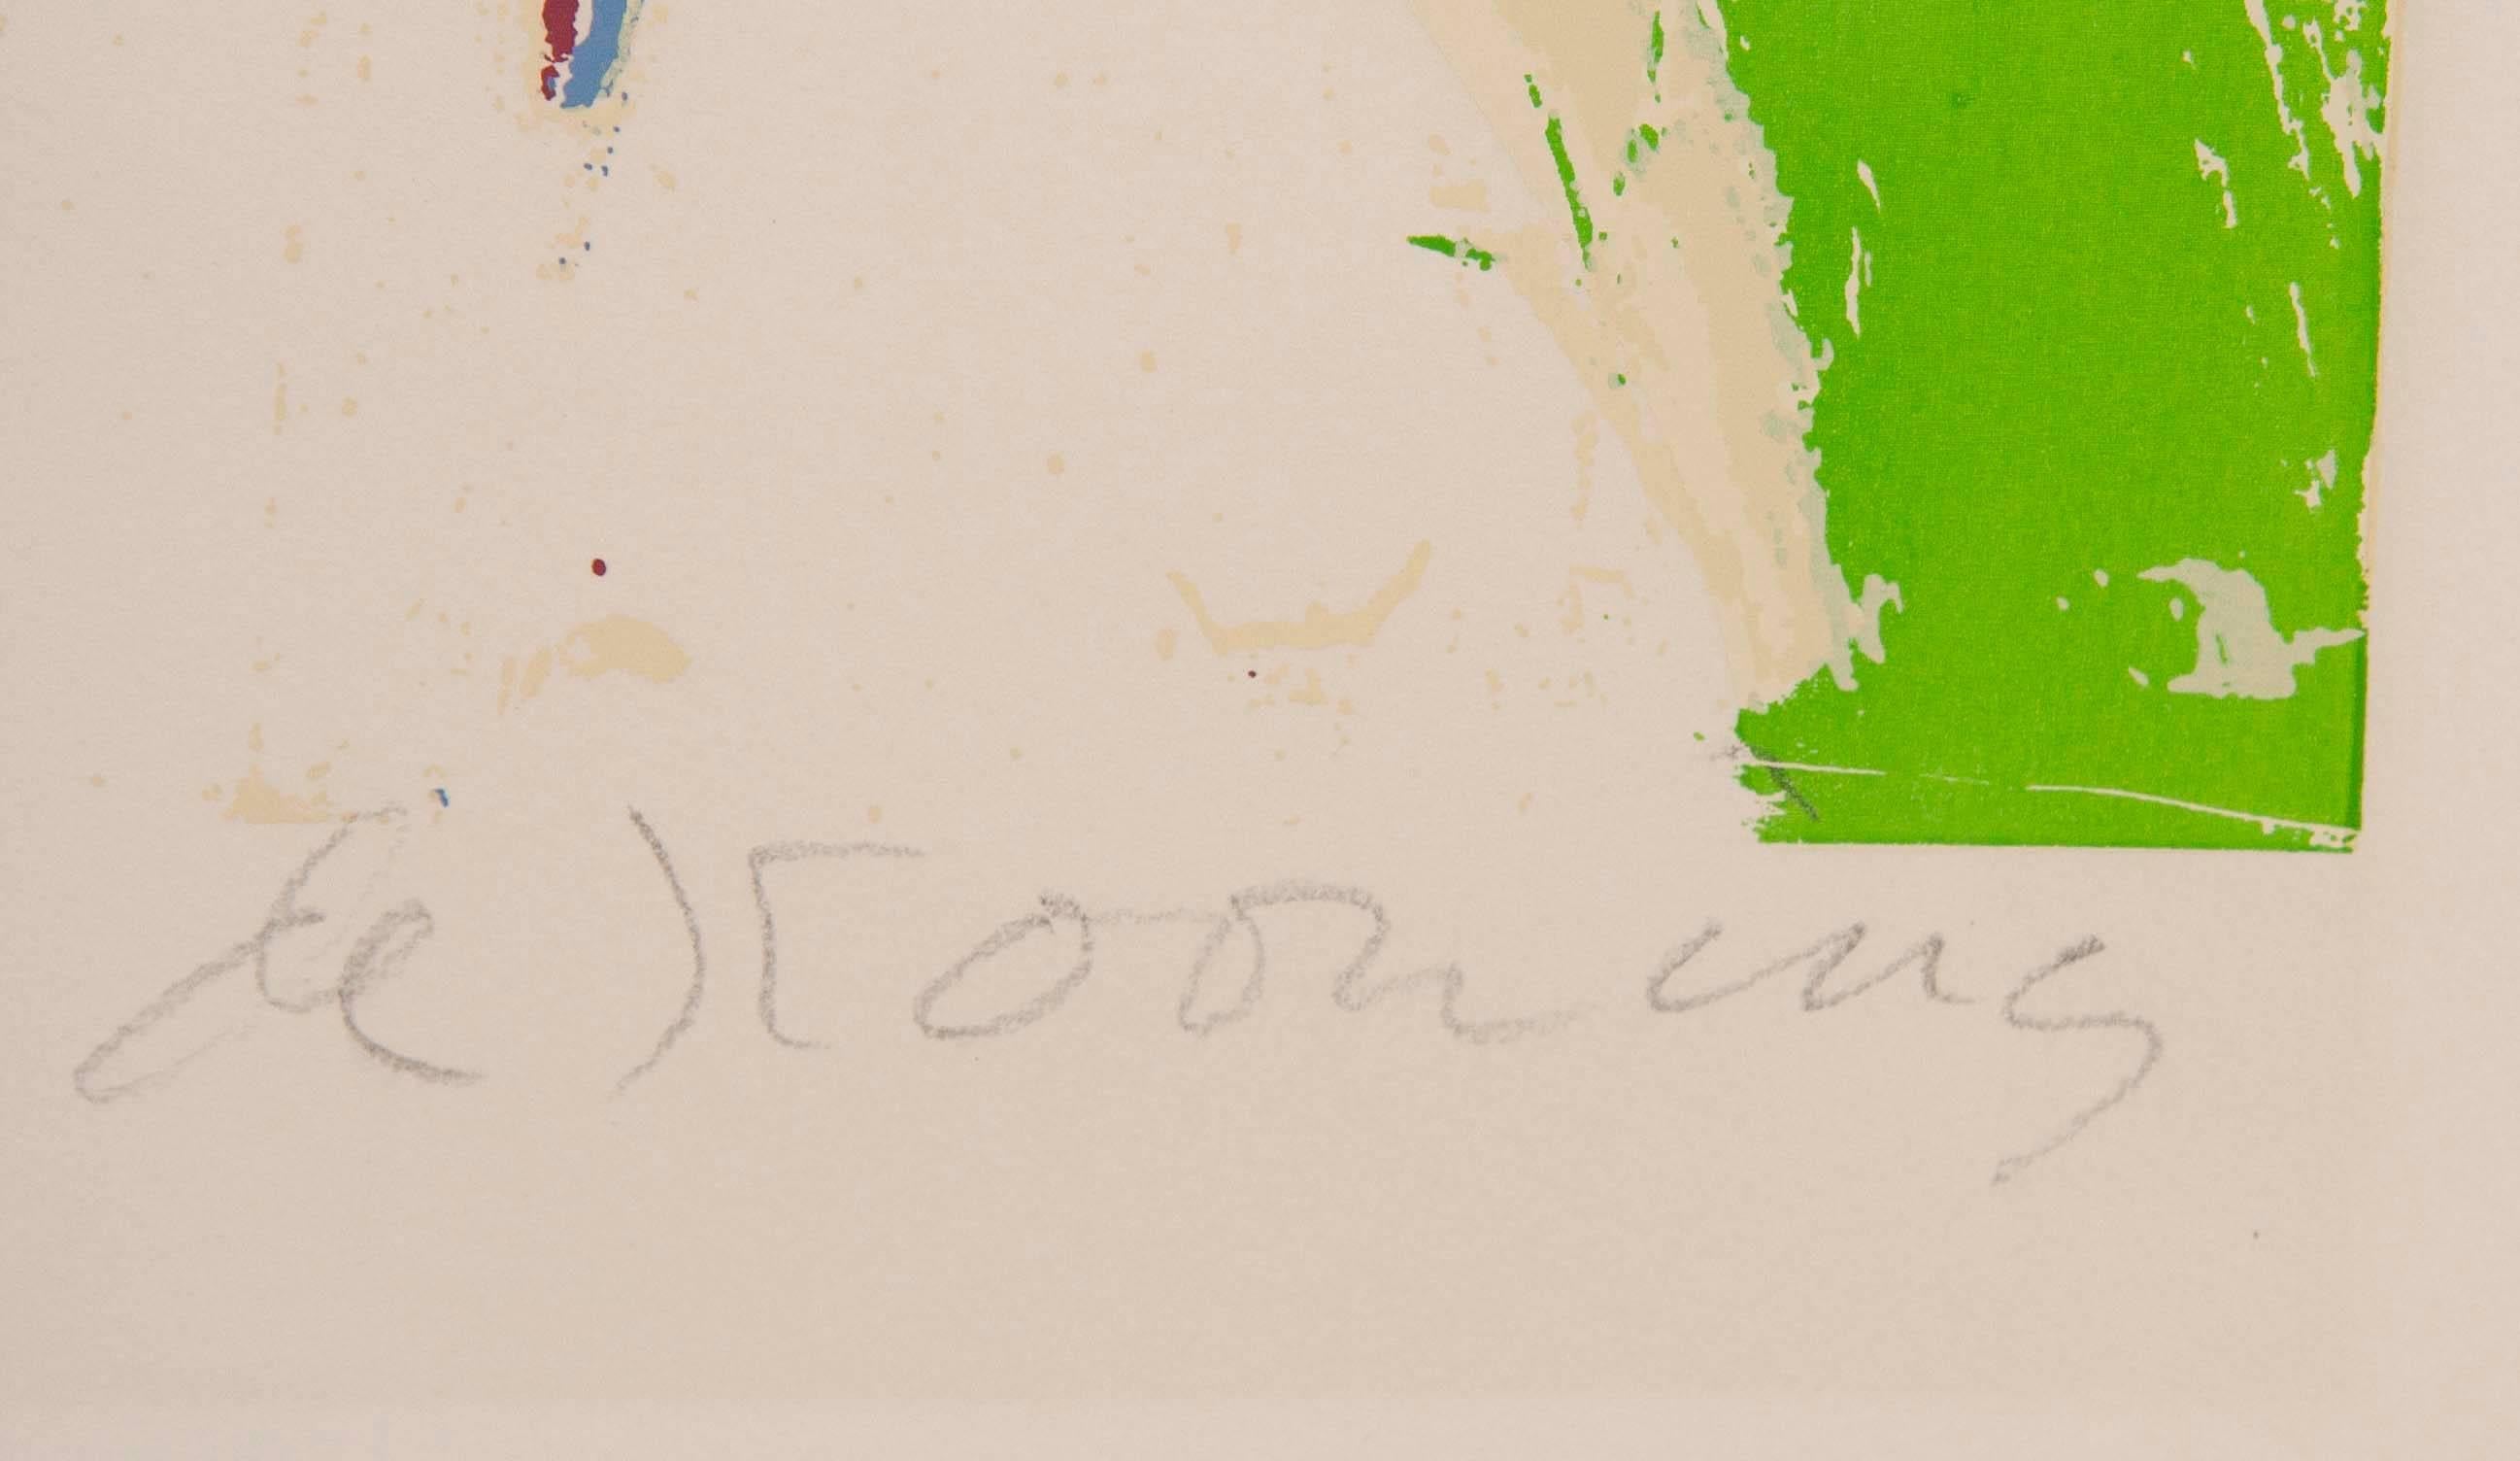 Sérigraphie sans titre de l'artiste expressionniste abstrait Willem de Kooning 1